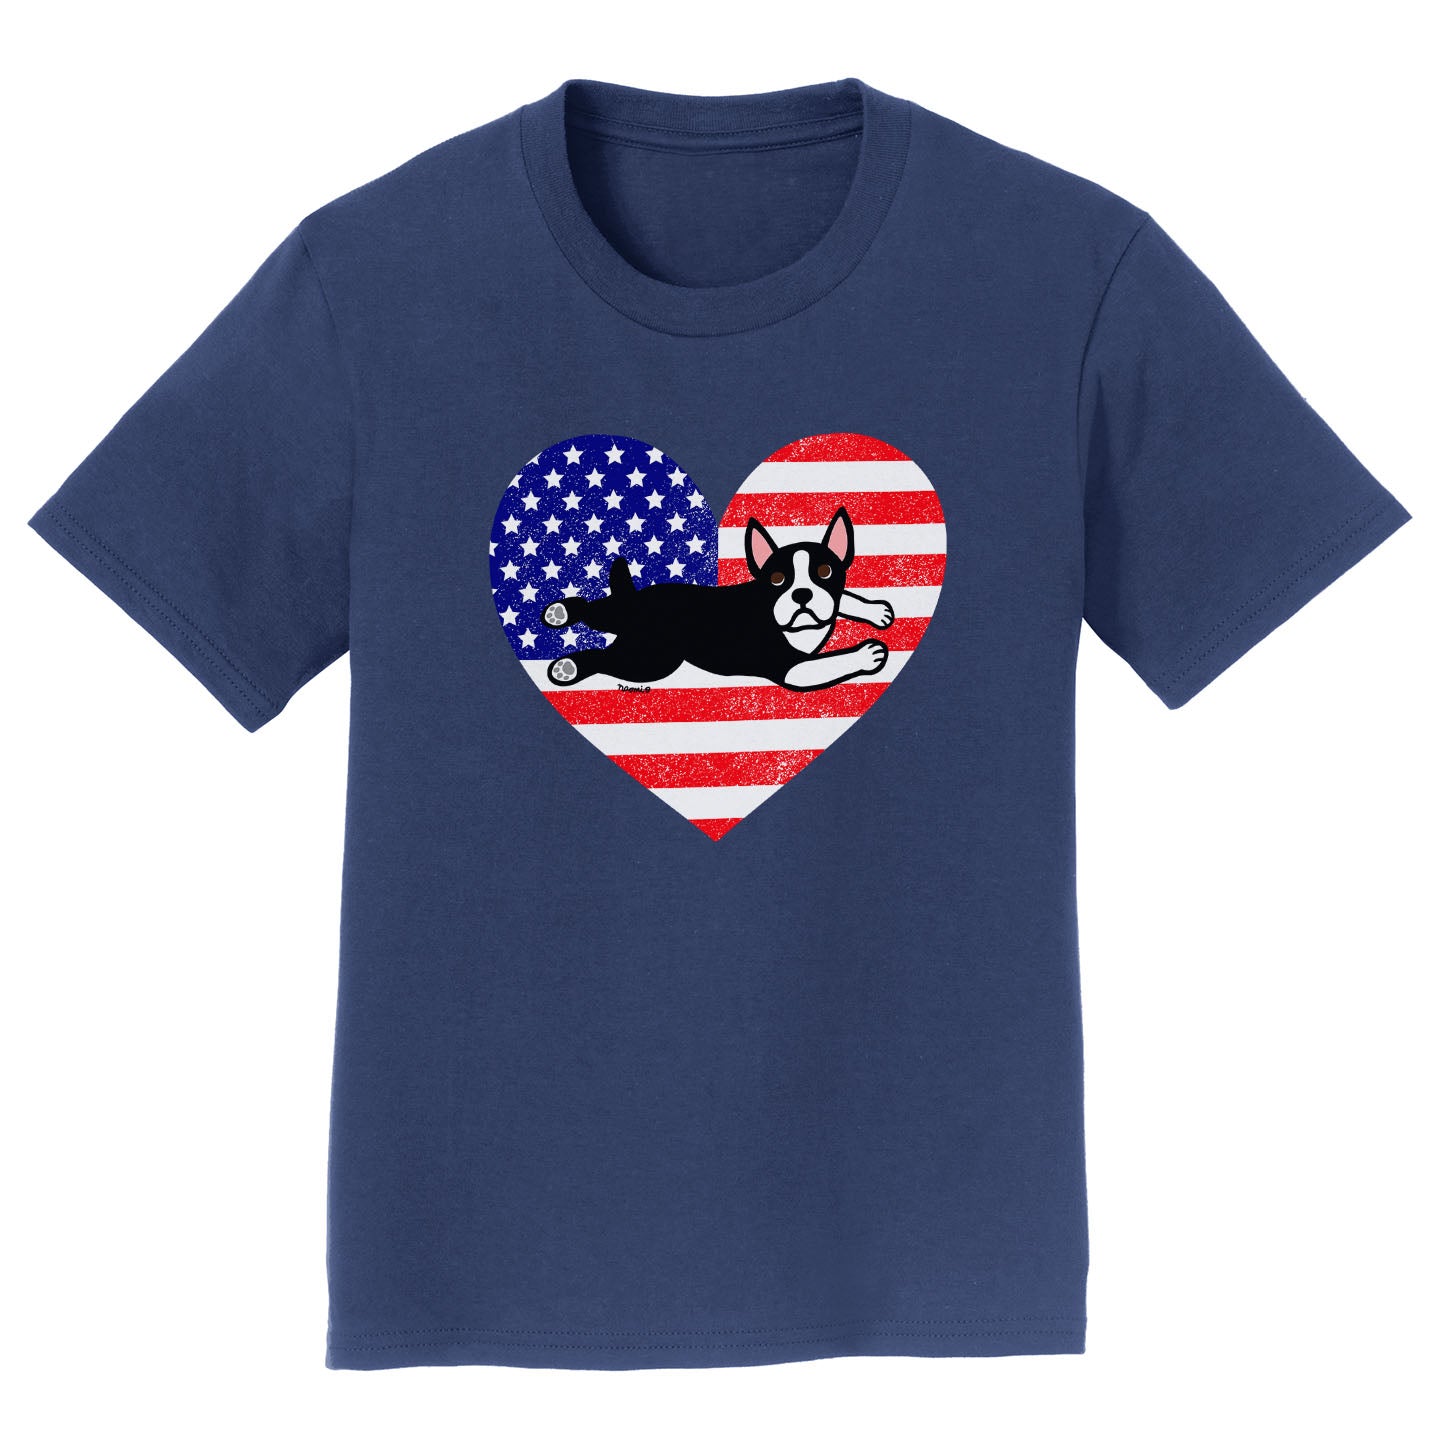 USA Flag Boston Terrier Puppy - Kids' Unisex T-Shirt